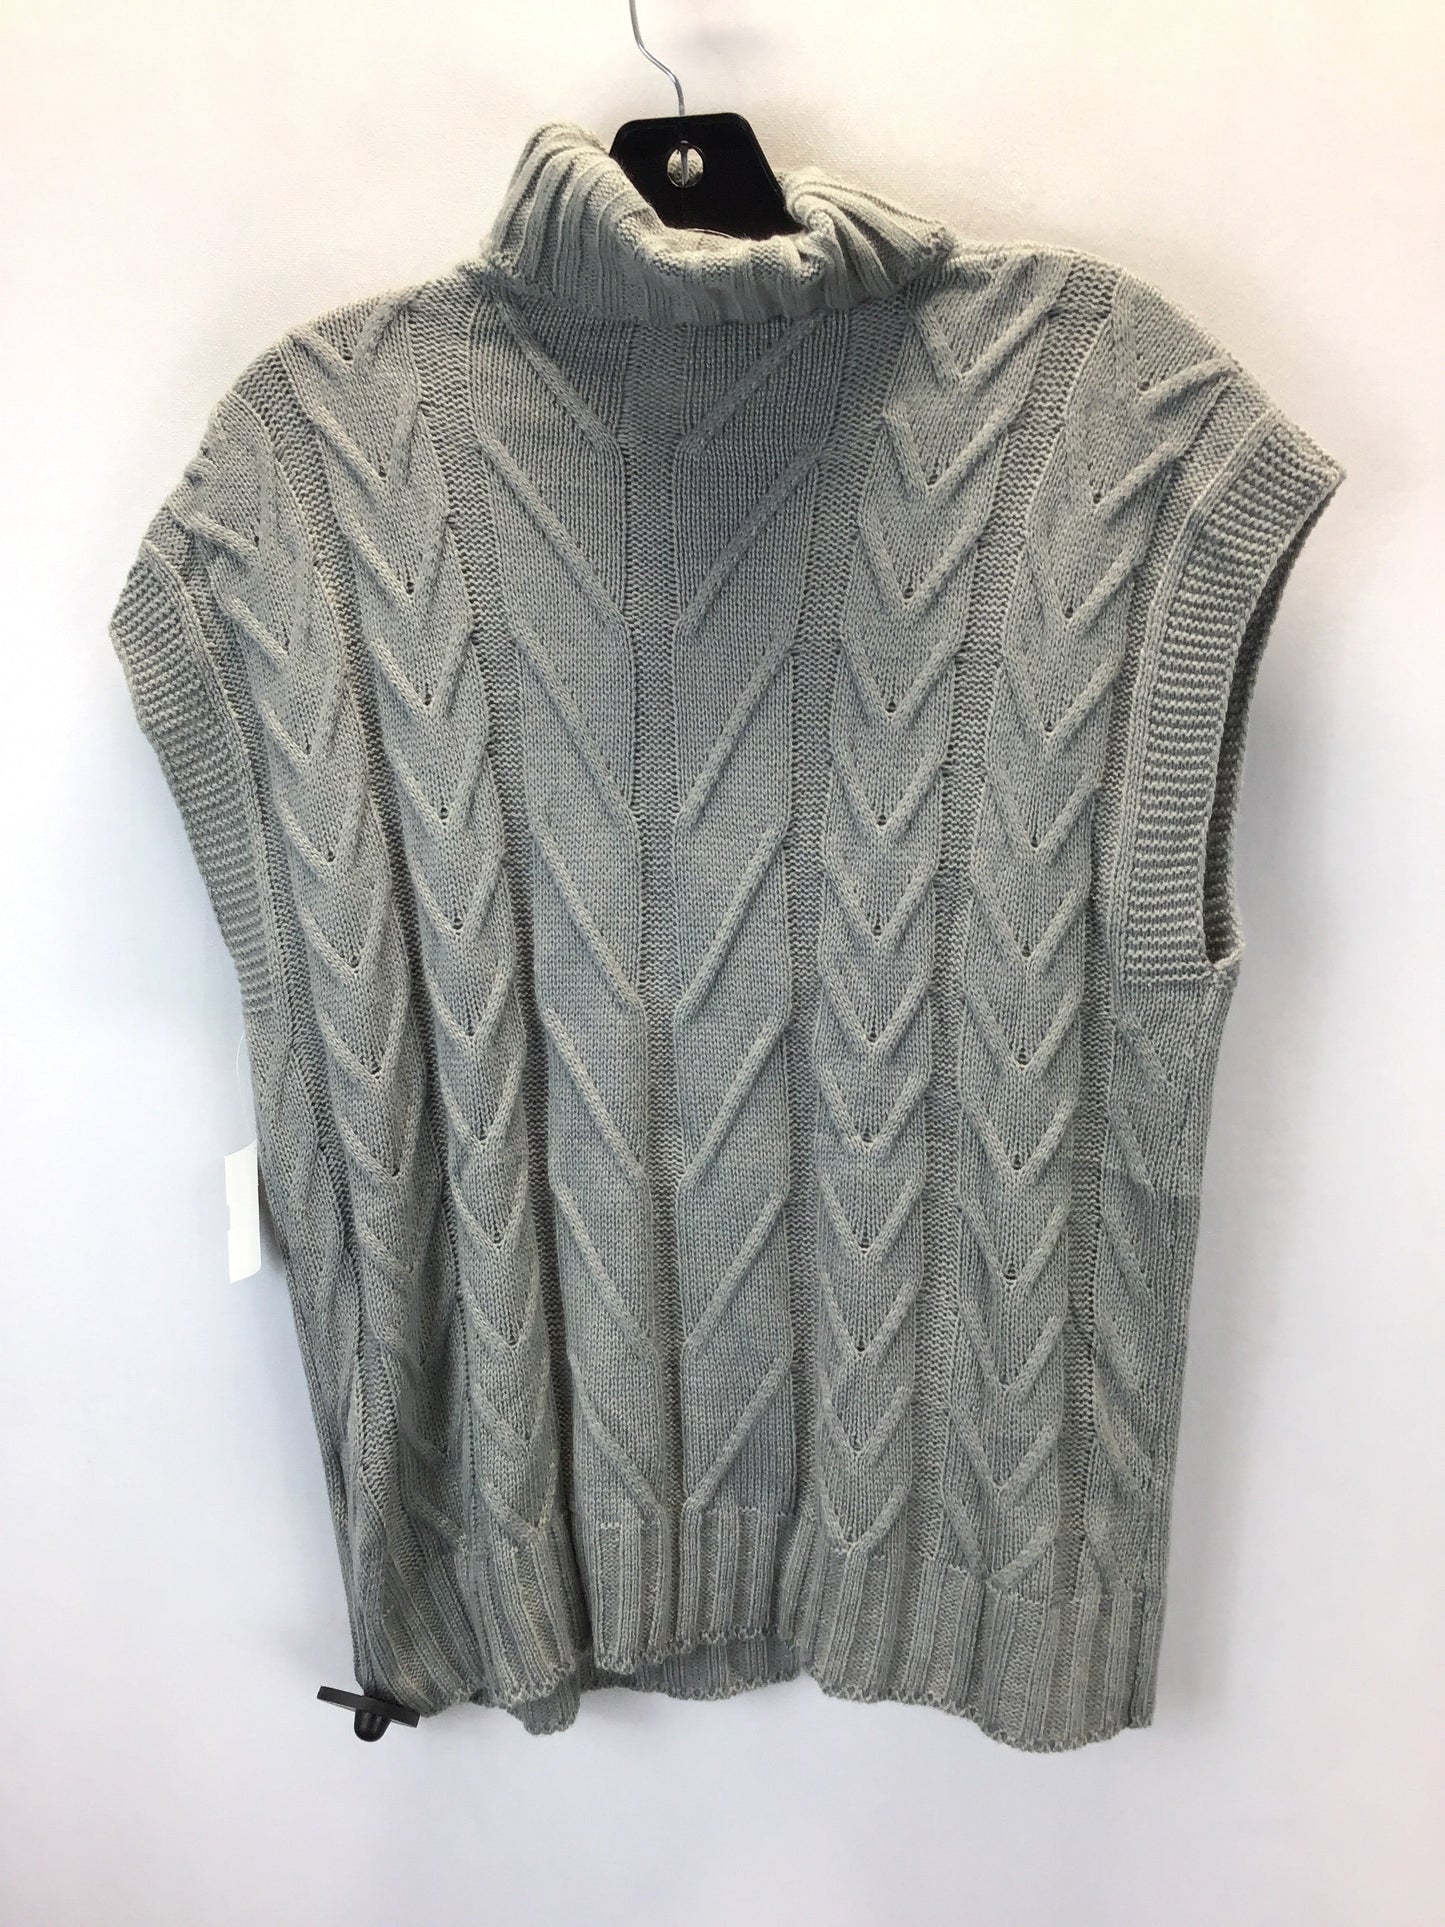 Vest Sweater By Shein  Size: M